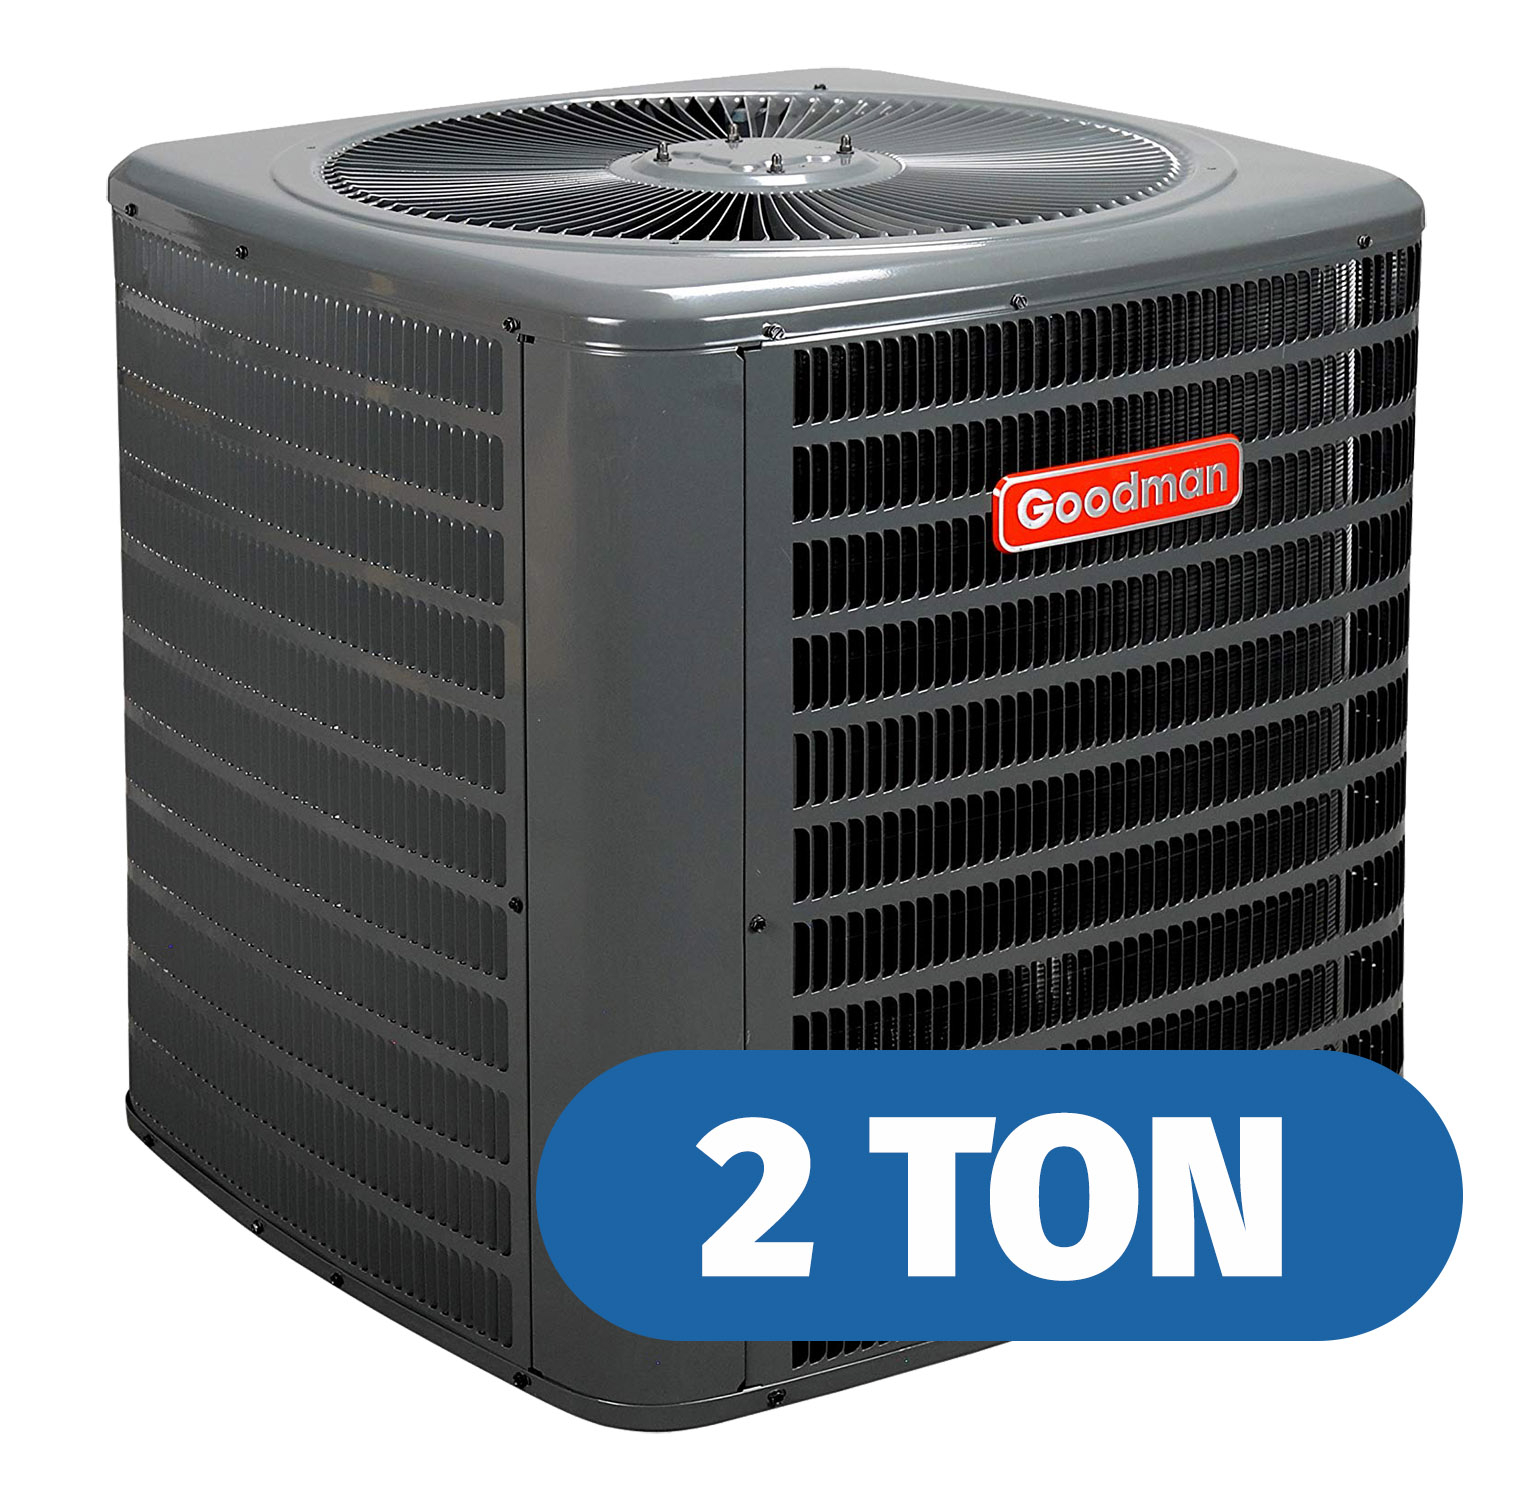 Goodman 2 Ton Air Conditioners 